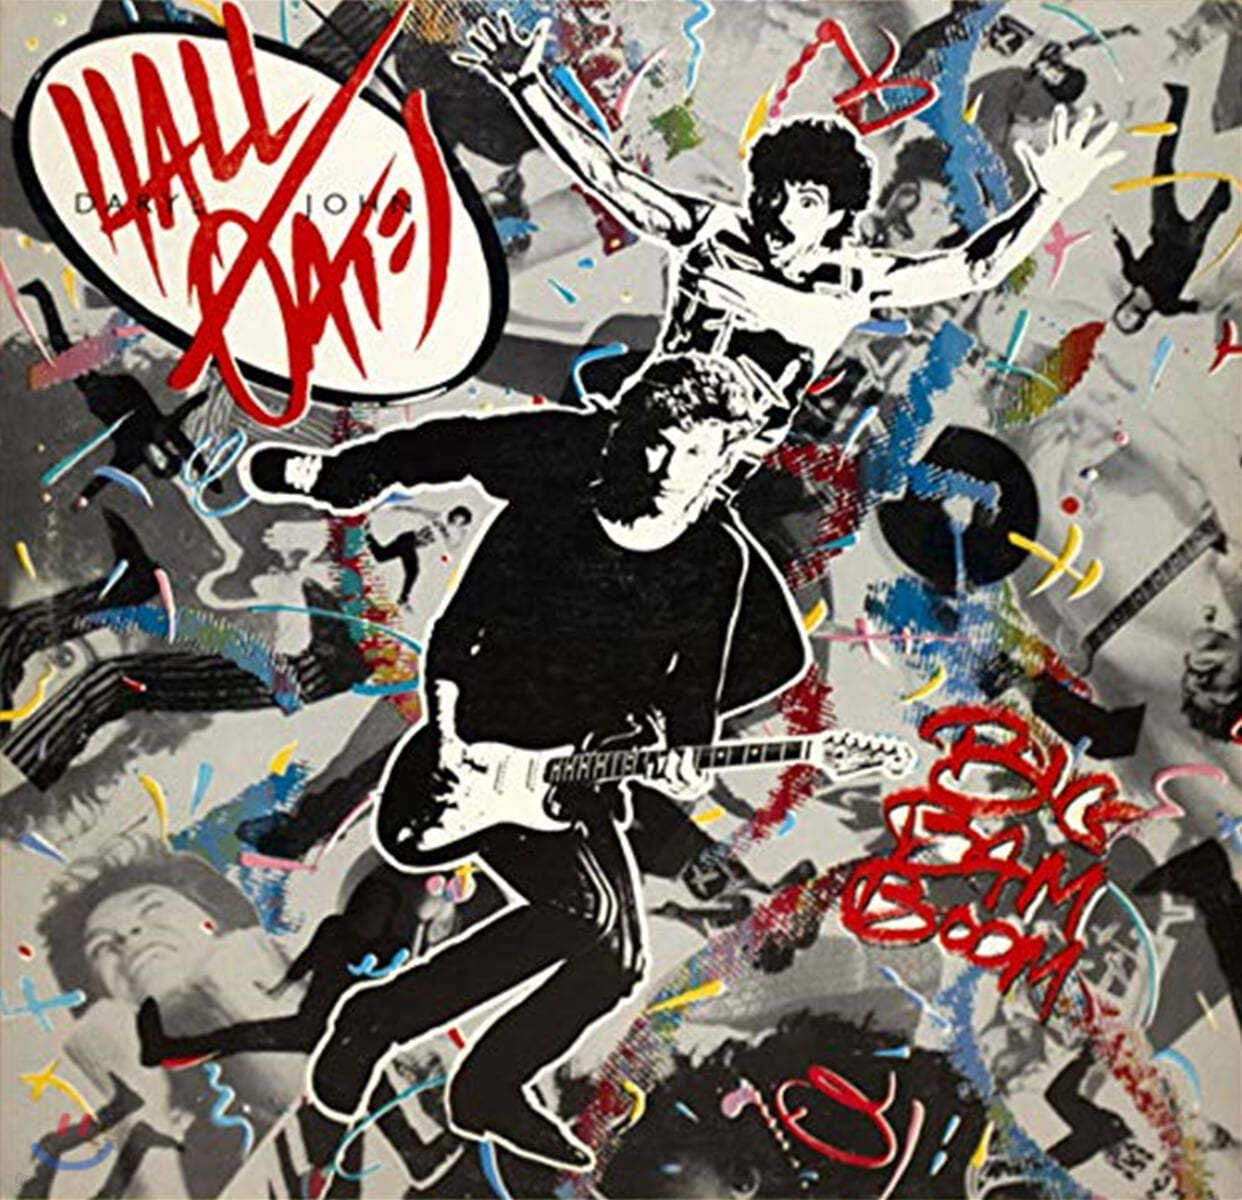 Hall &amp; Oates (홀 앤 오츠) - Big Bam Boom [LP]